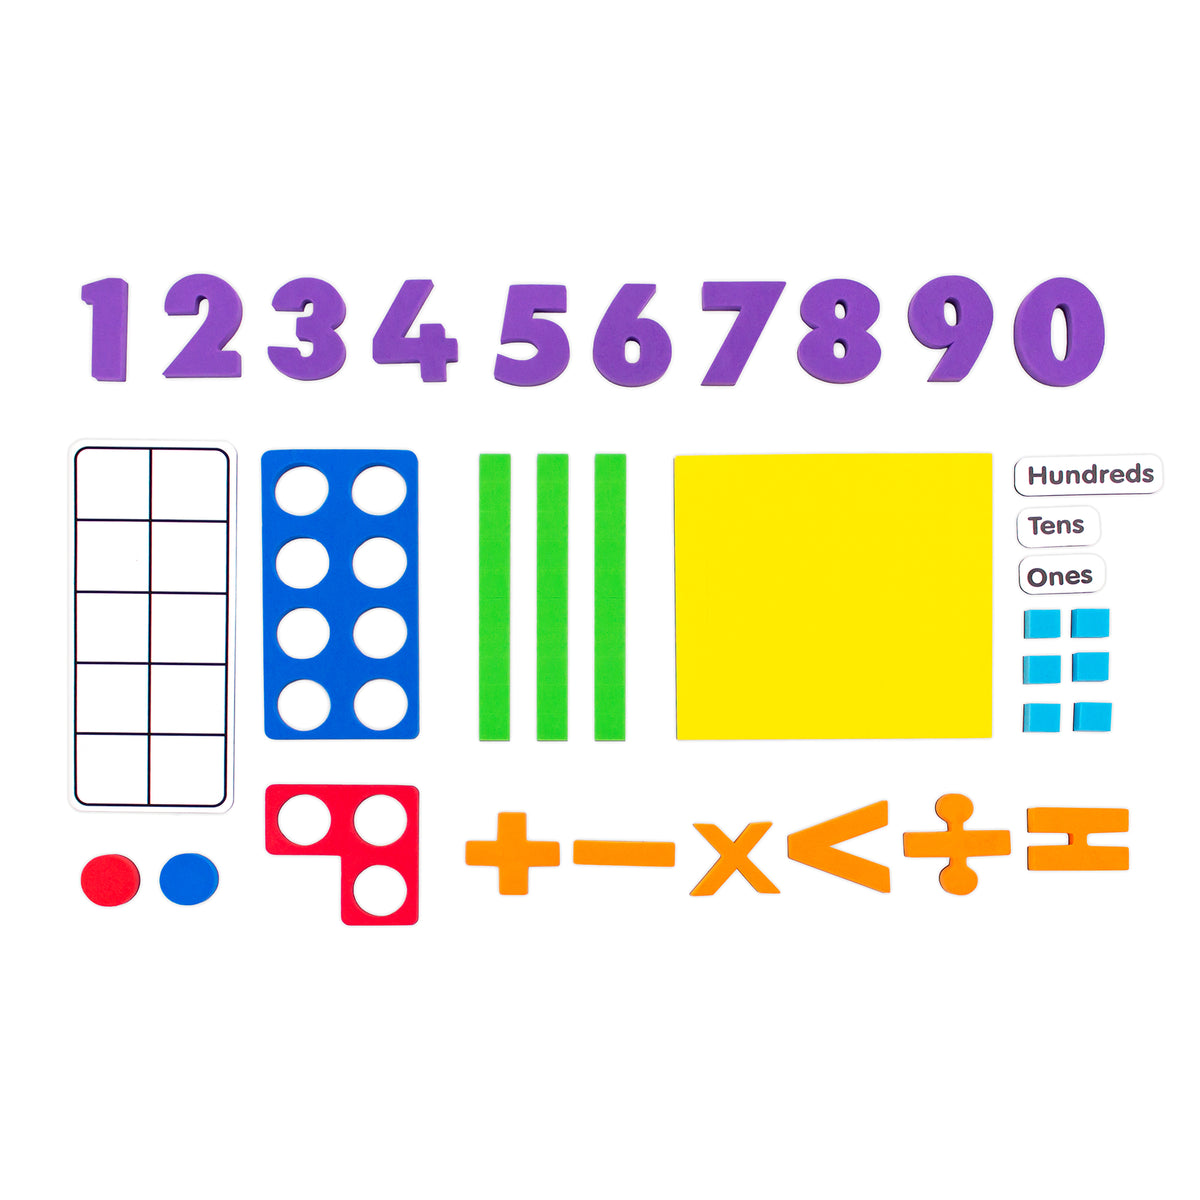 Rainbow Numbers Magnetic Numbers